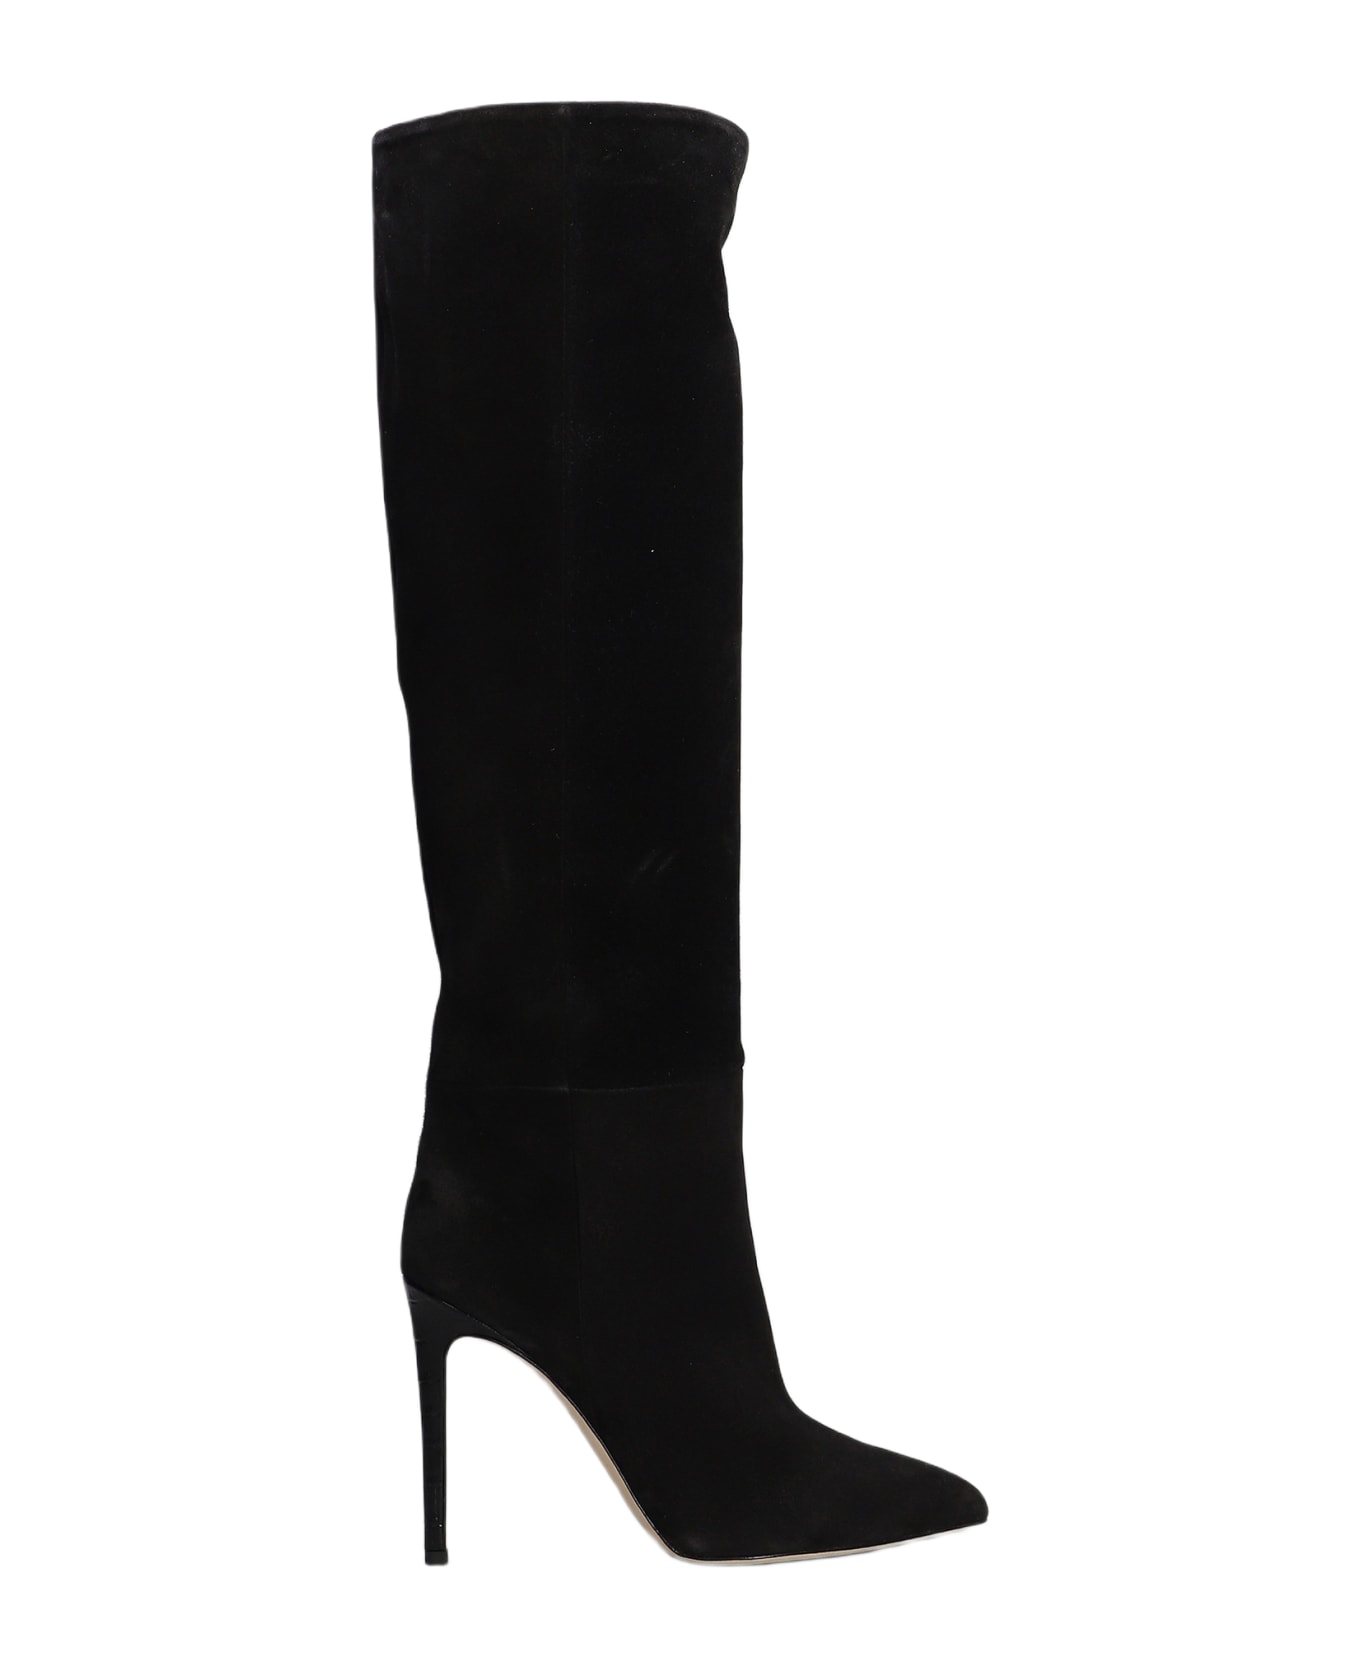 Paris Texas High Heels Boots In Black Suede - black ブーツ